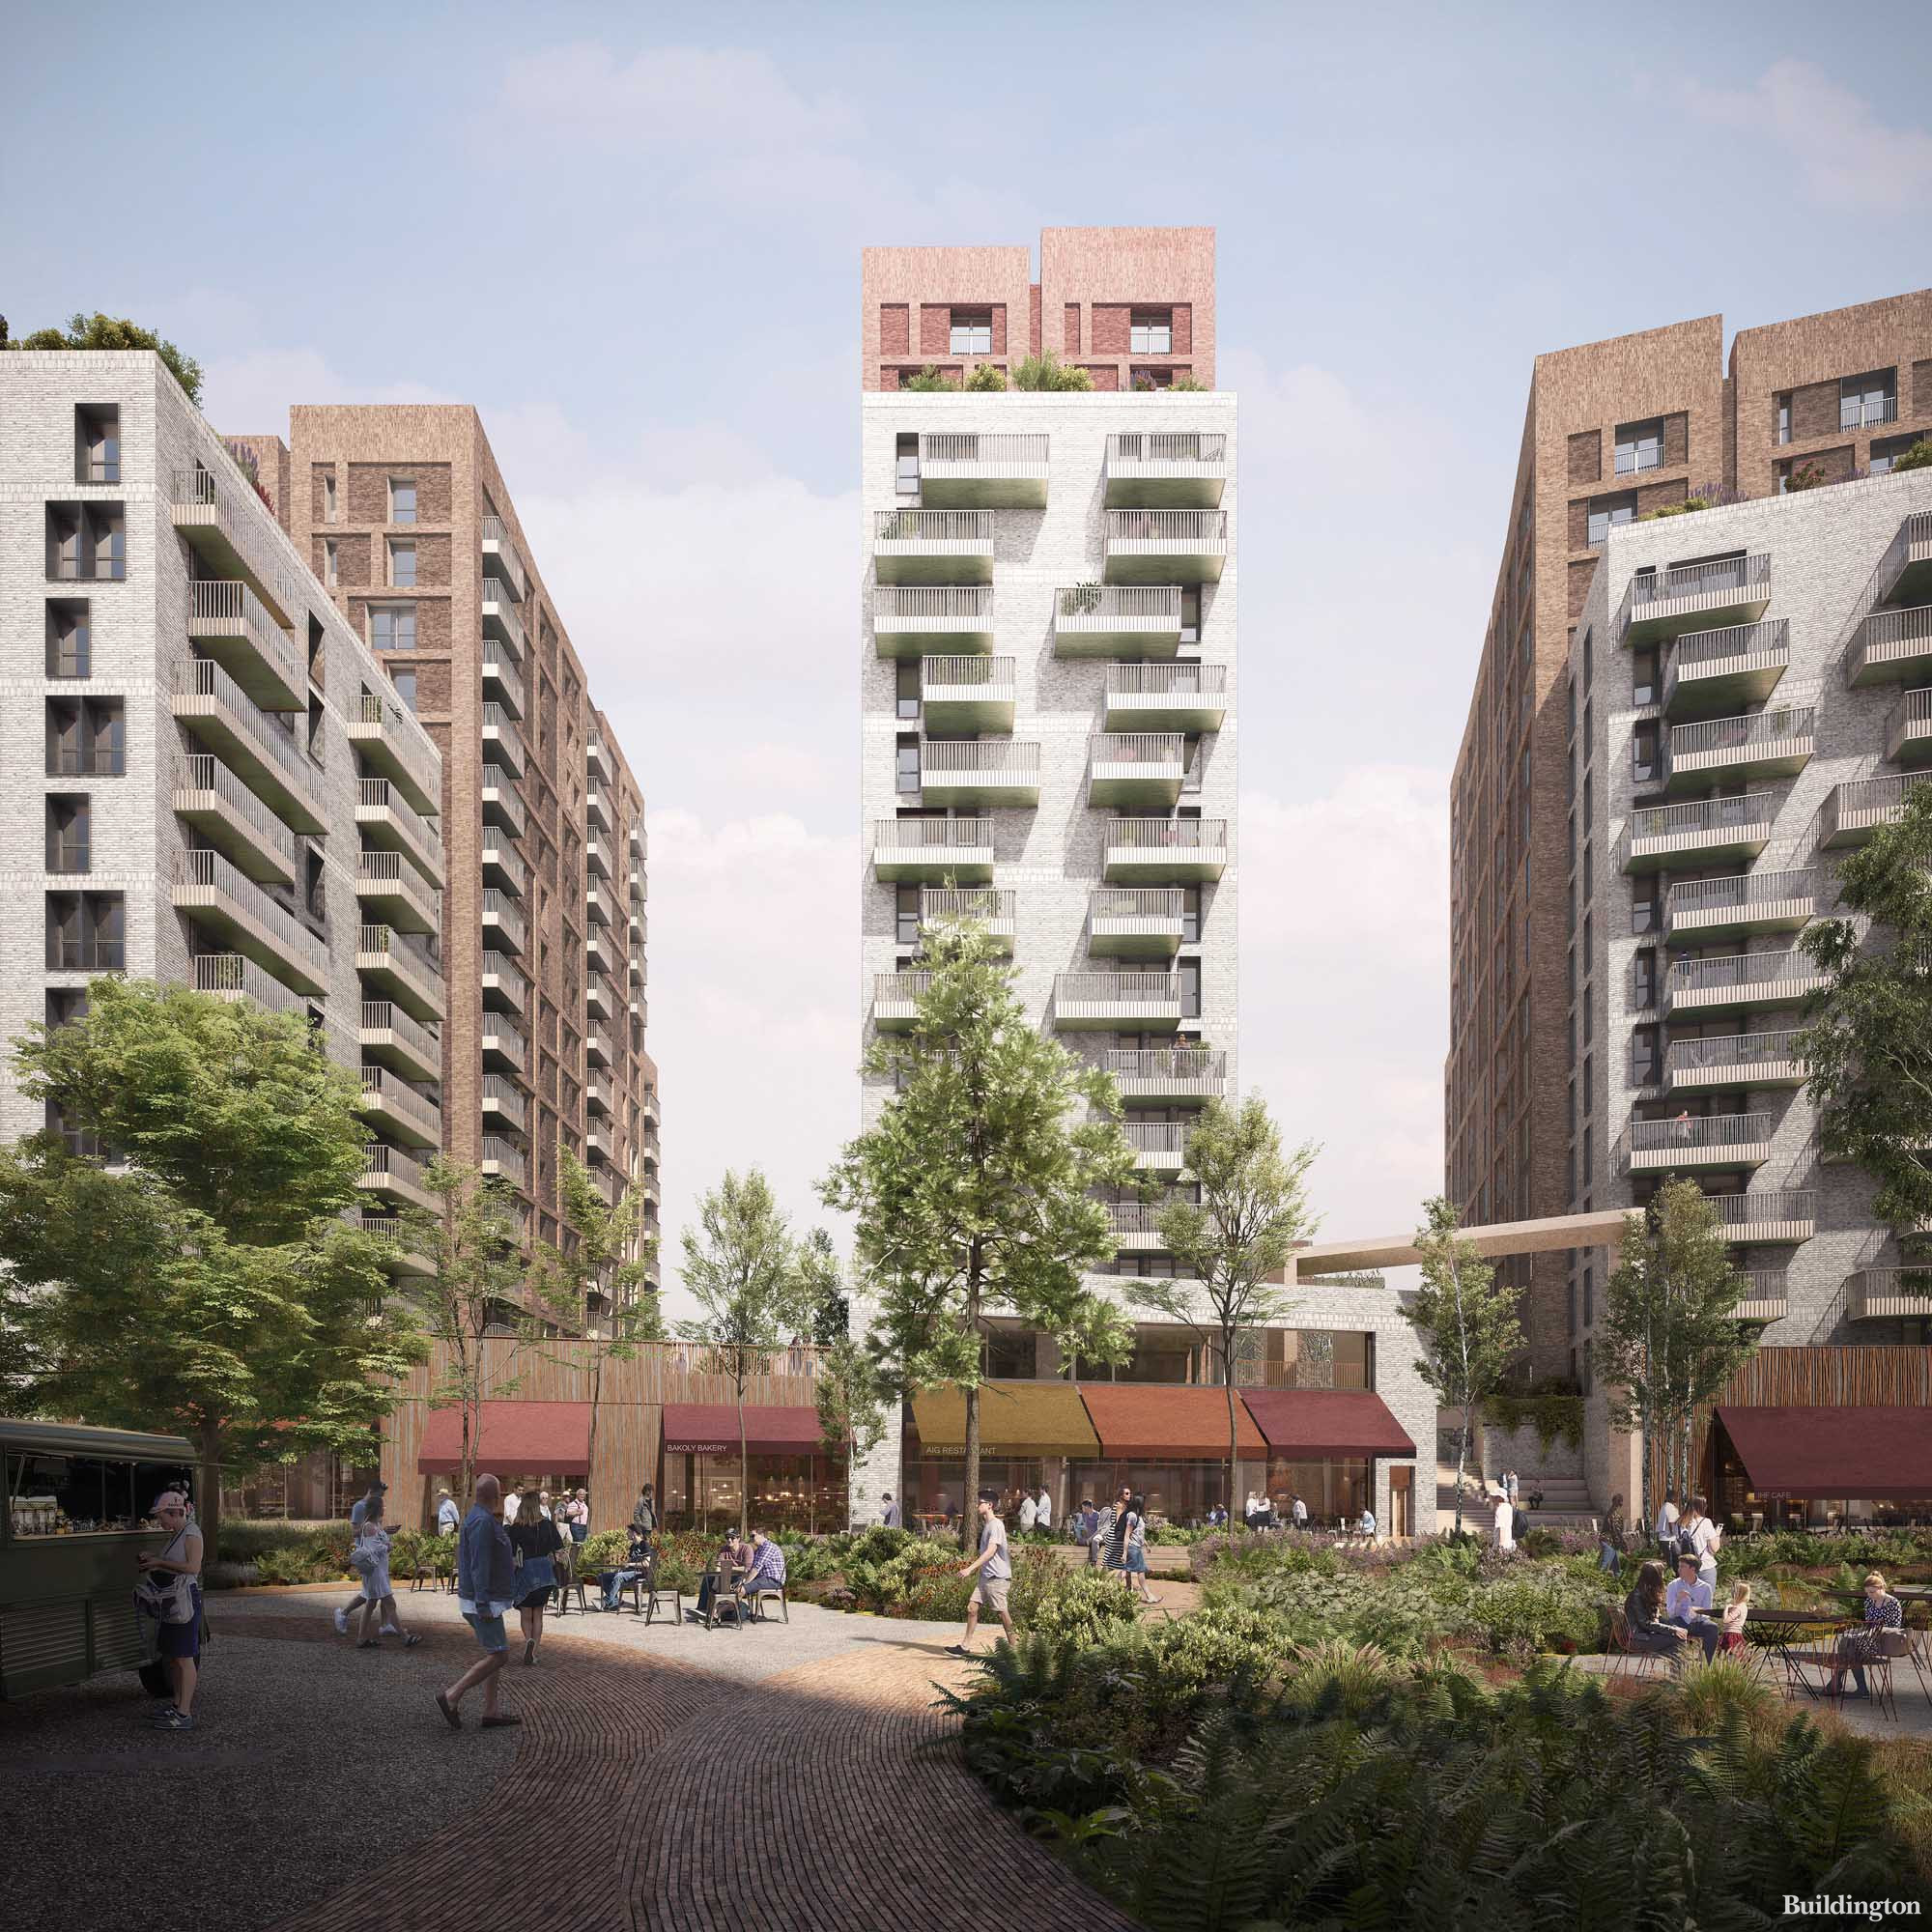 One Maidenhead Build-to-Rent development by HUB designed by Studio Egret West.